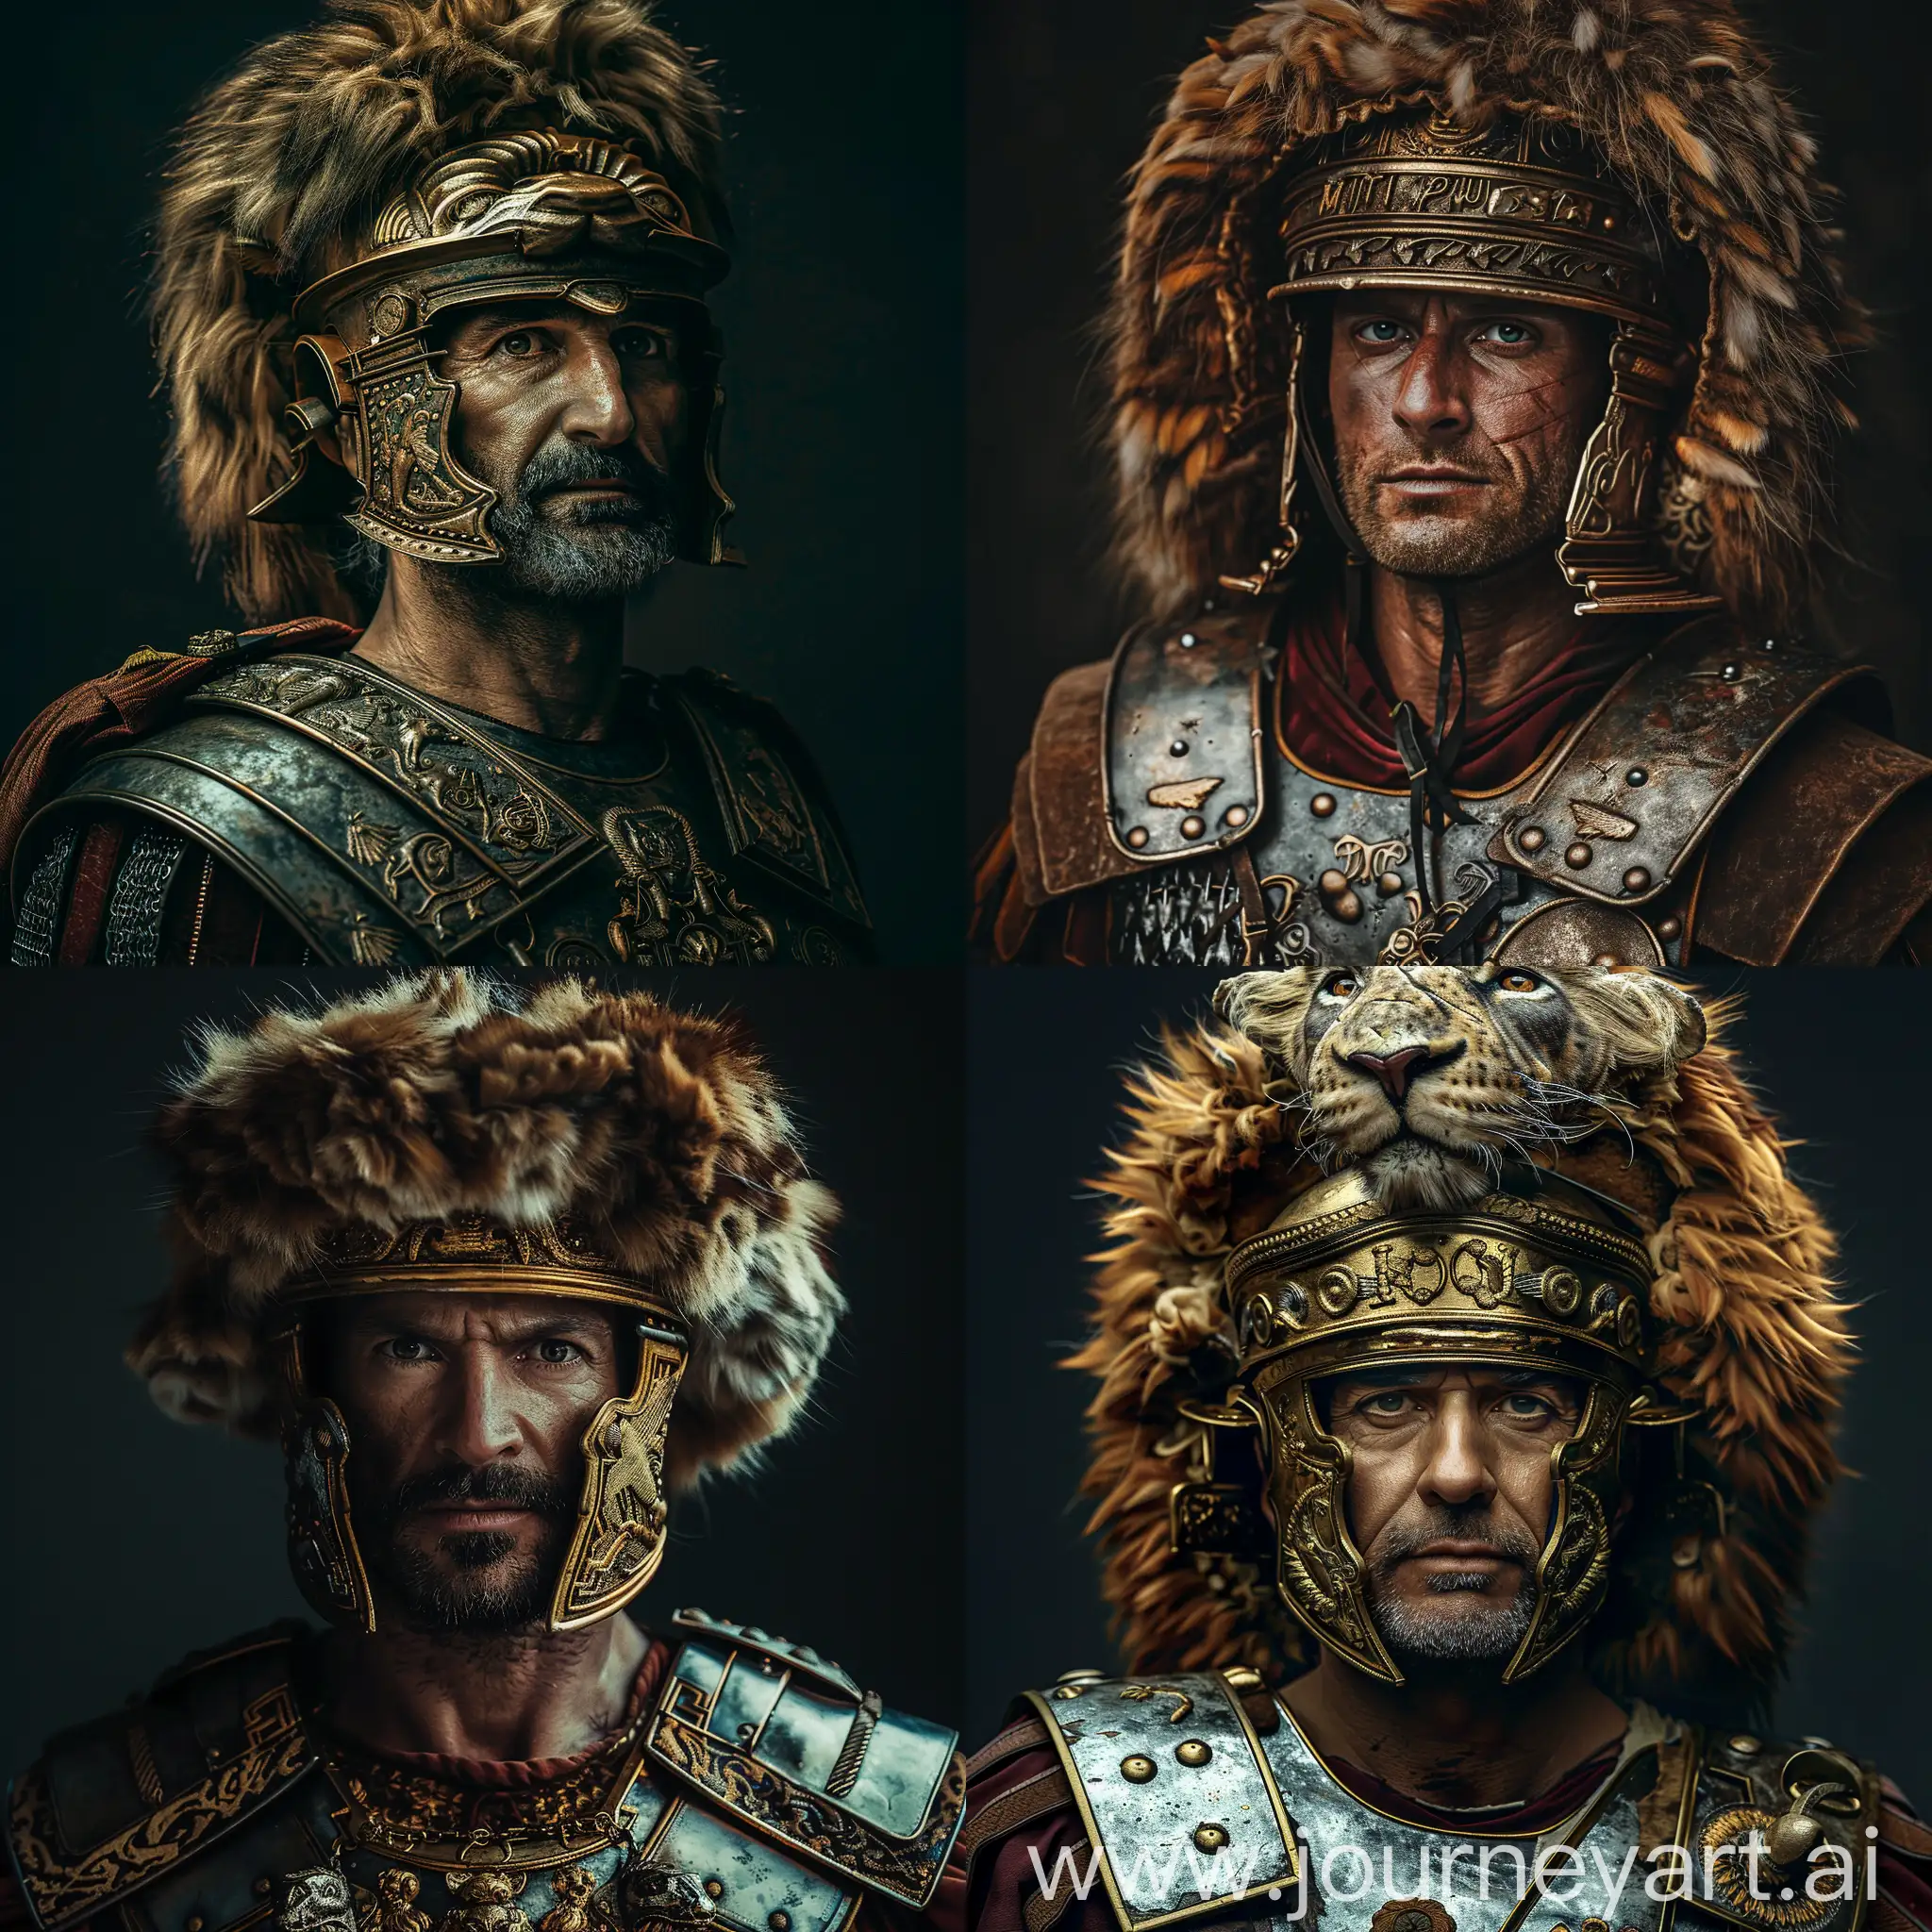 Regal-Portrait-of-Mithridates-Eupator-in-Roman-Armor-with-Lion-Pelt-Headgear